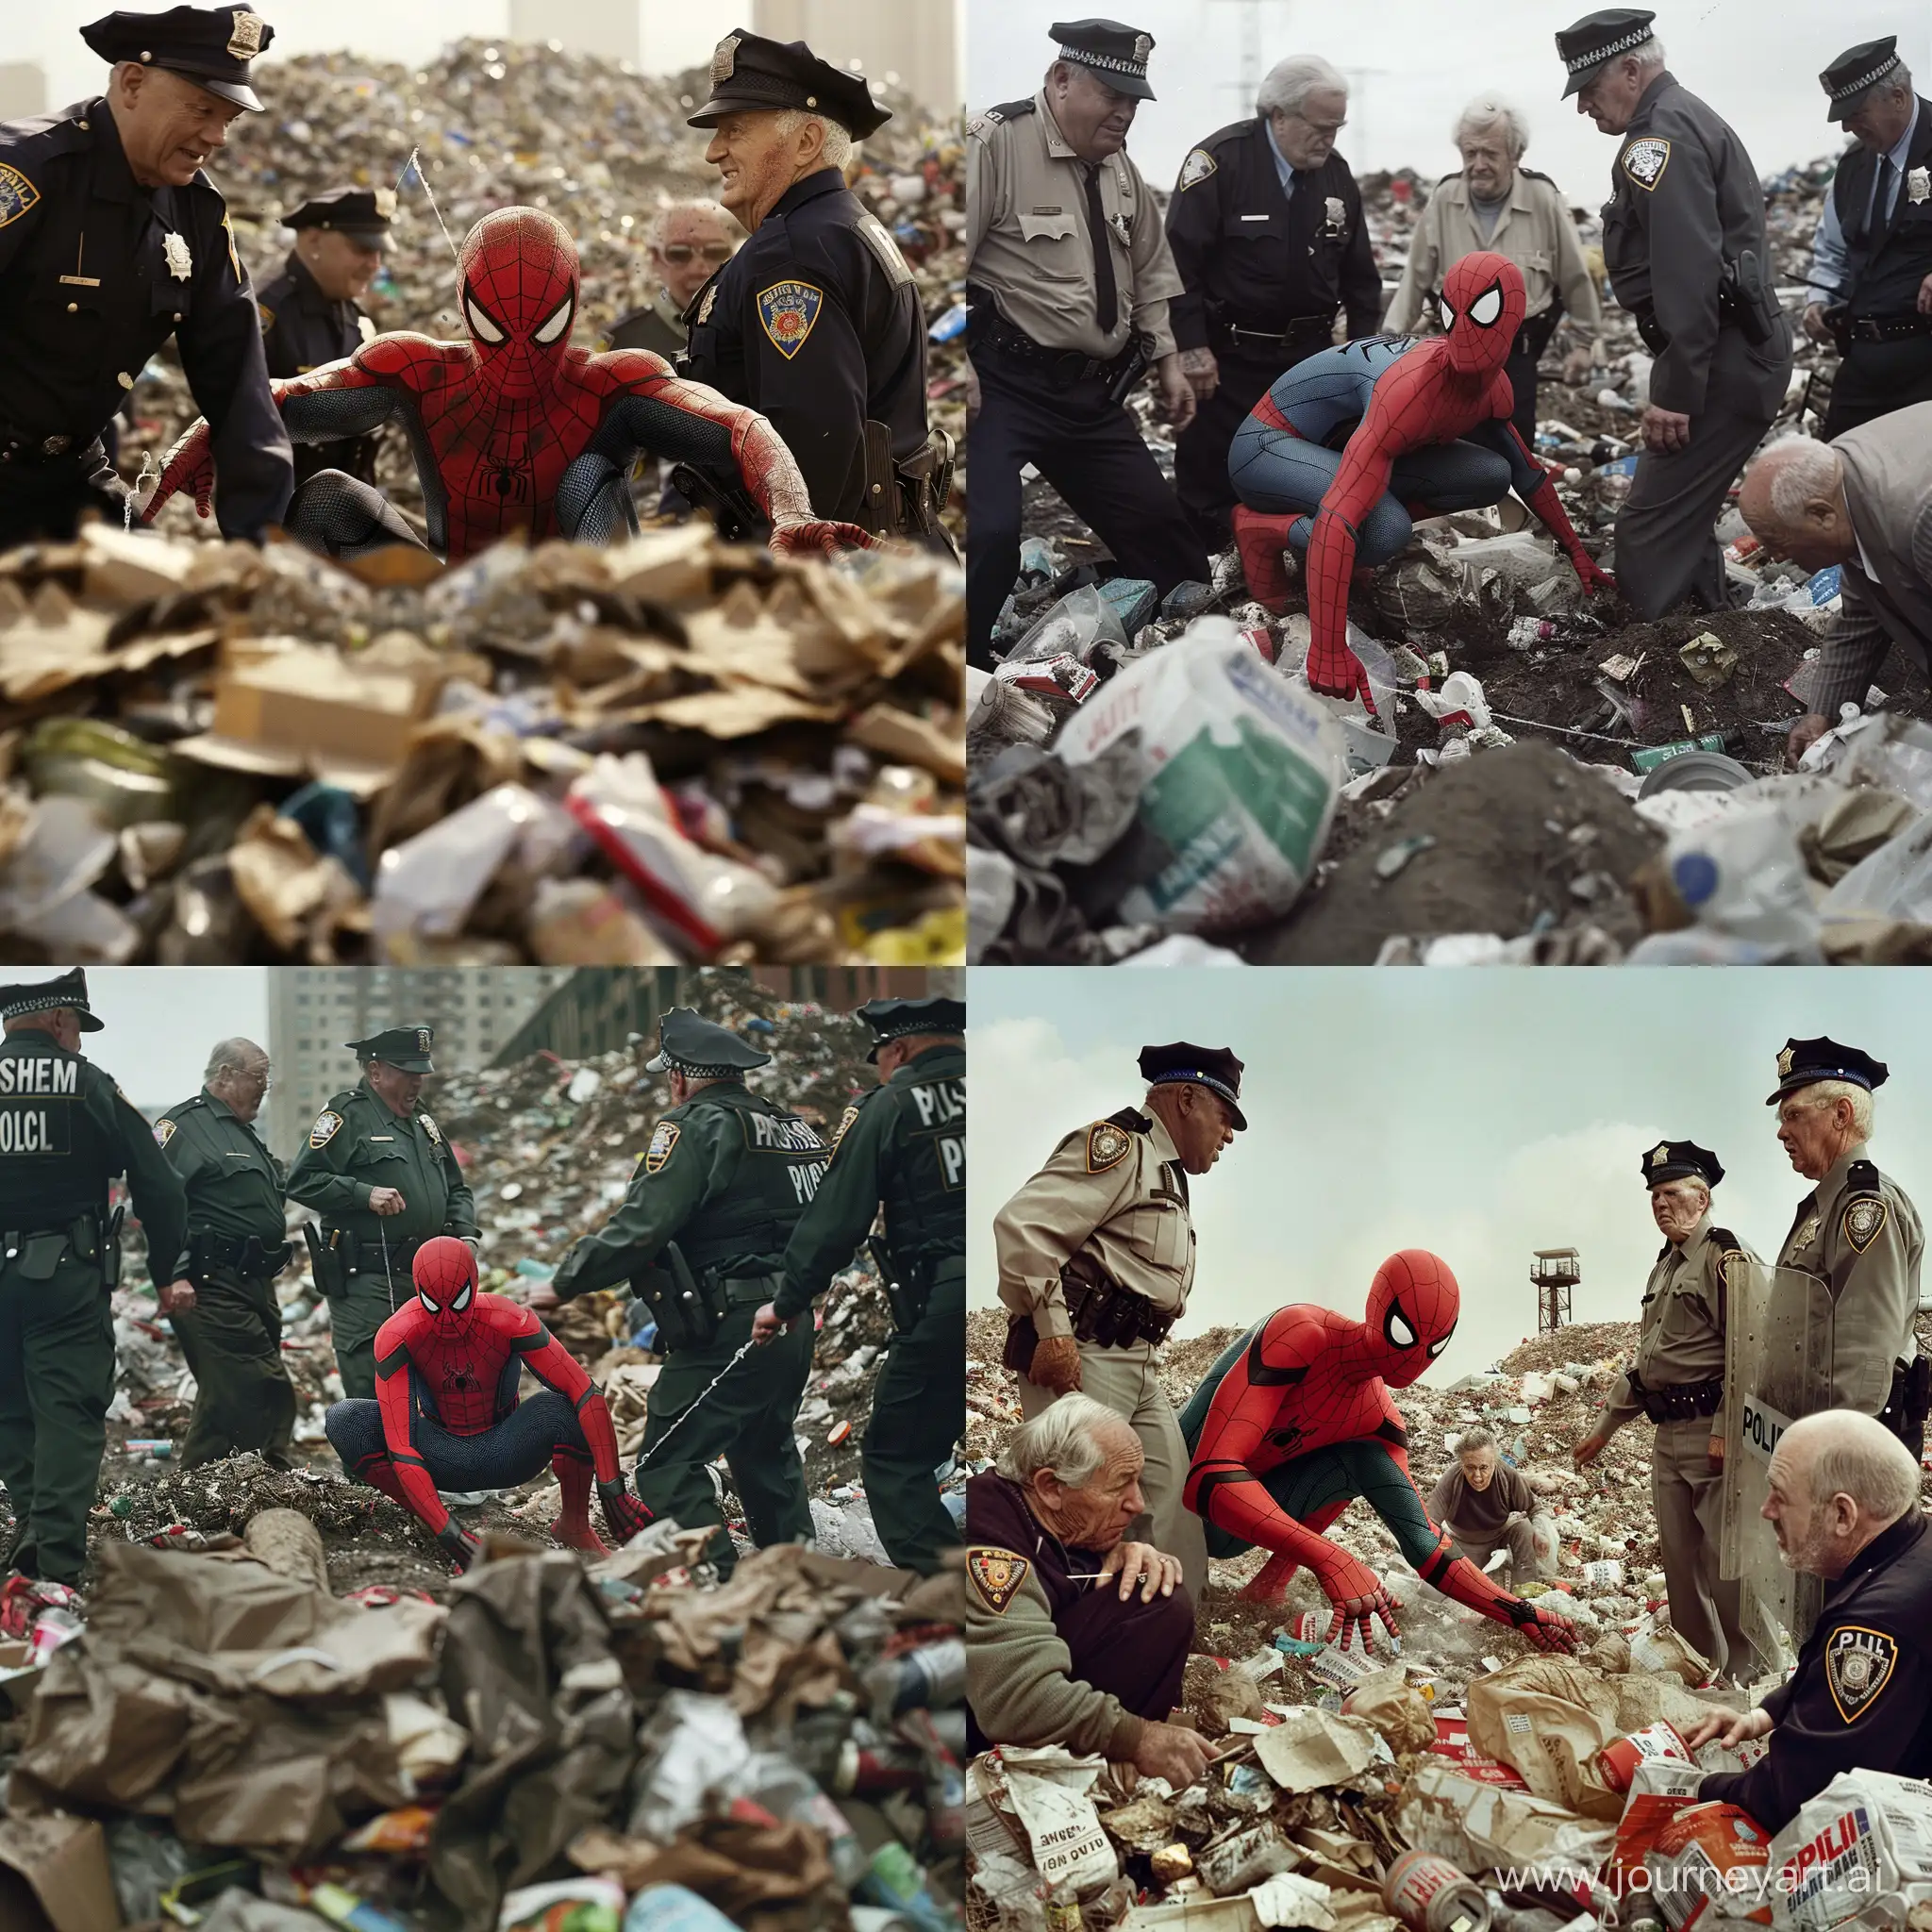 Elderly-Policemen-Rescuing-Spiderman-from-Landfill-Chaos